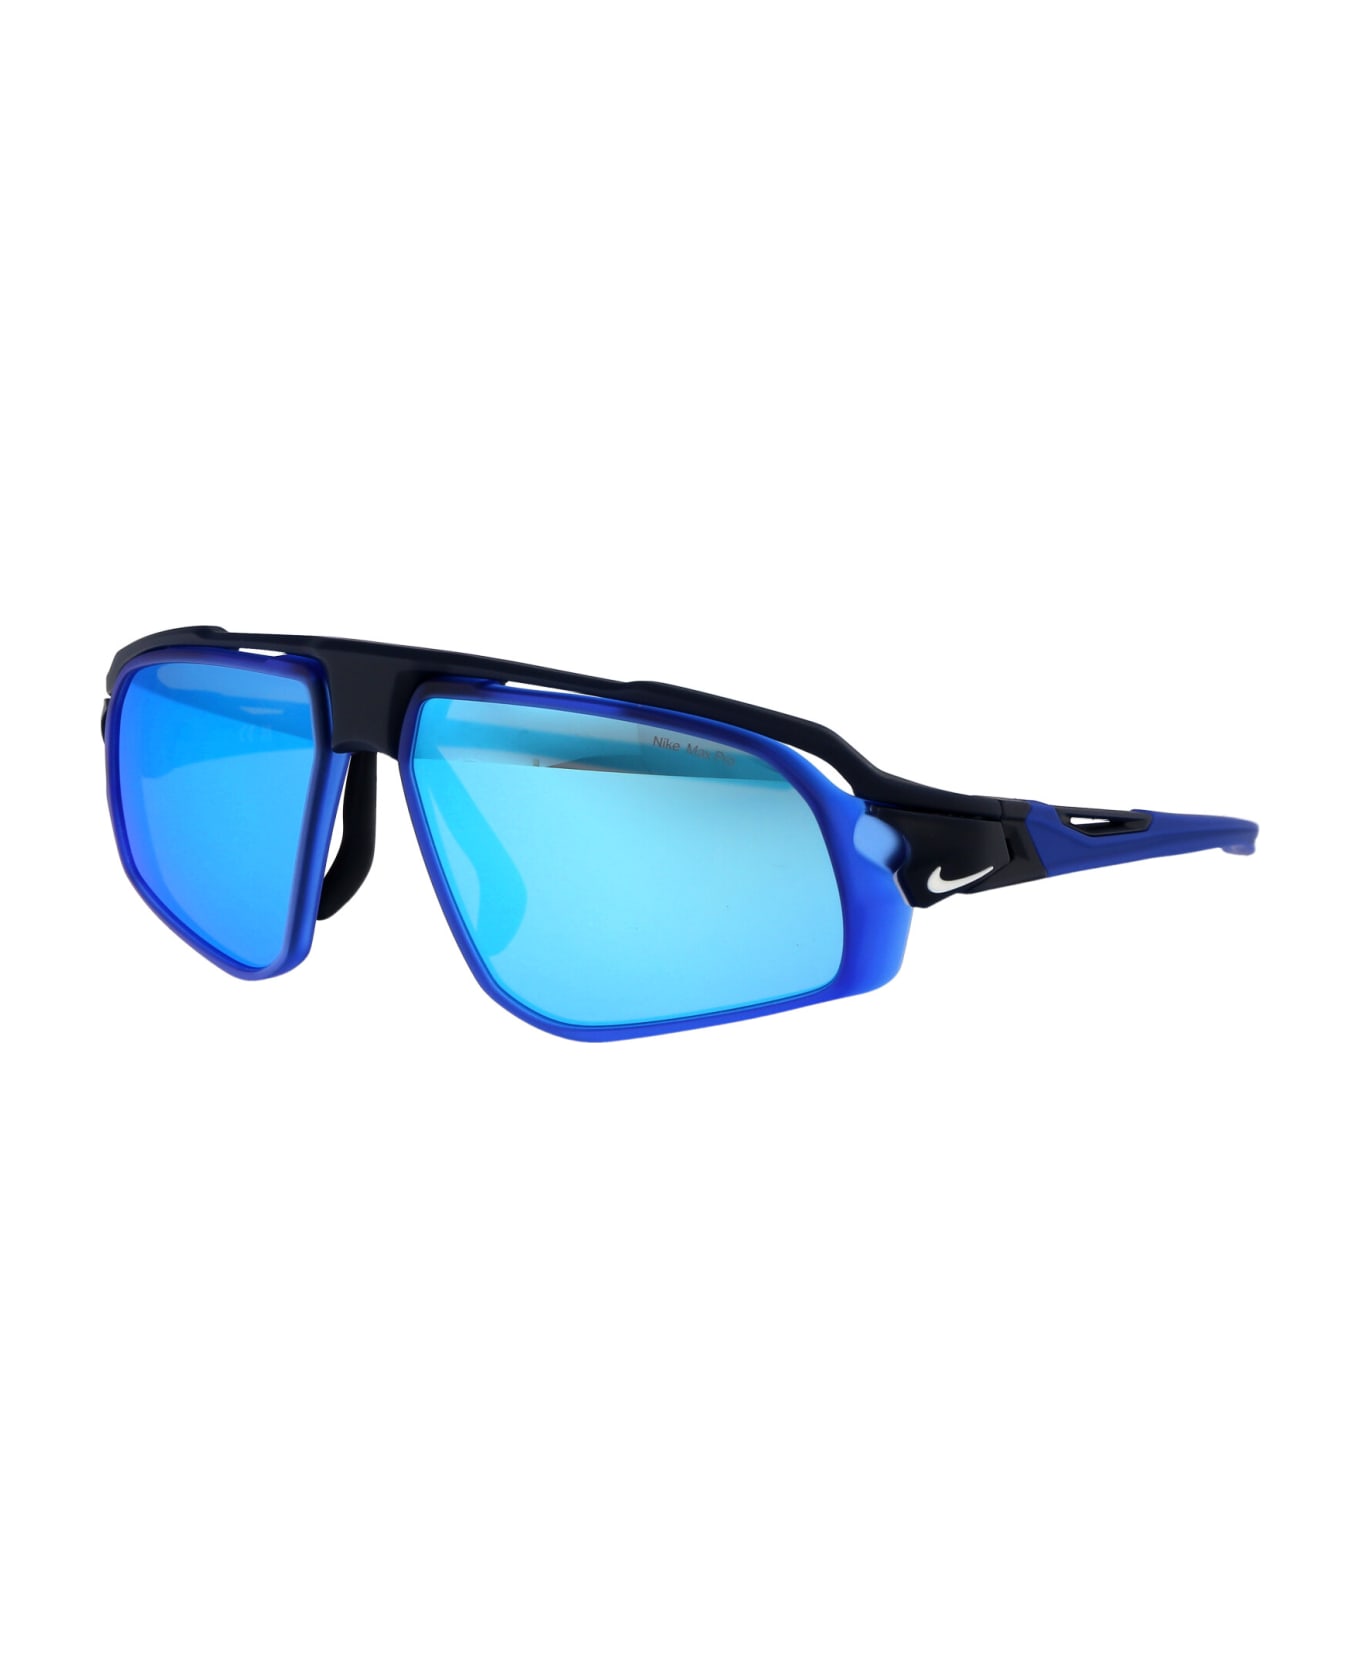 Nike Flyfree M Sunglasses - 410 BLUE MIRROR MATTE NAVY サングラス